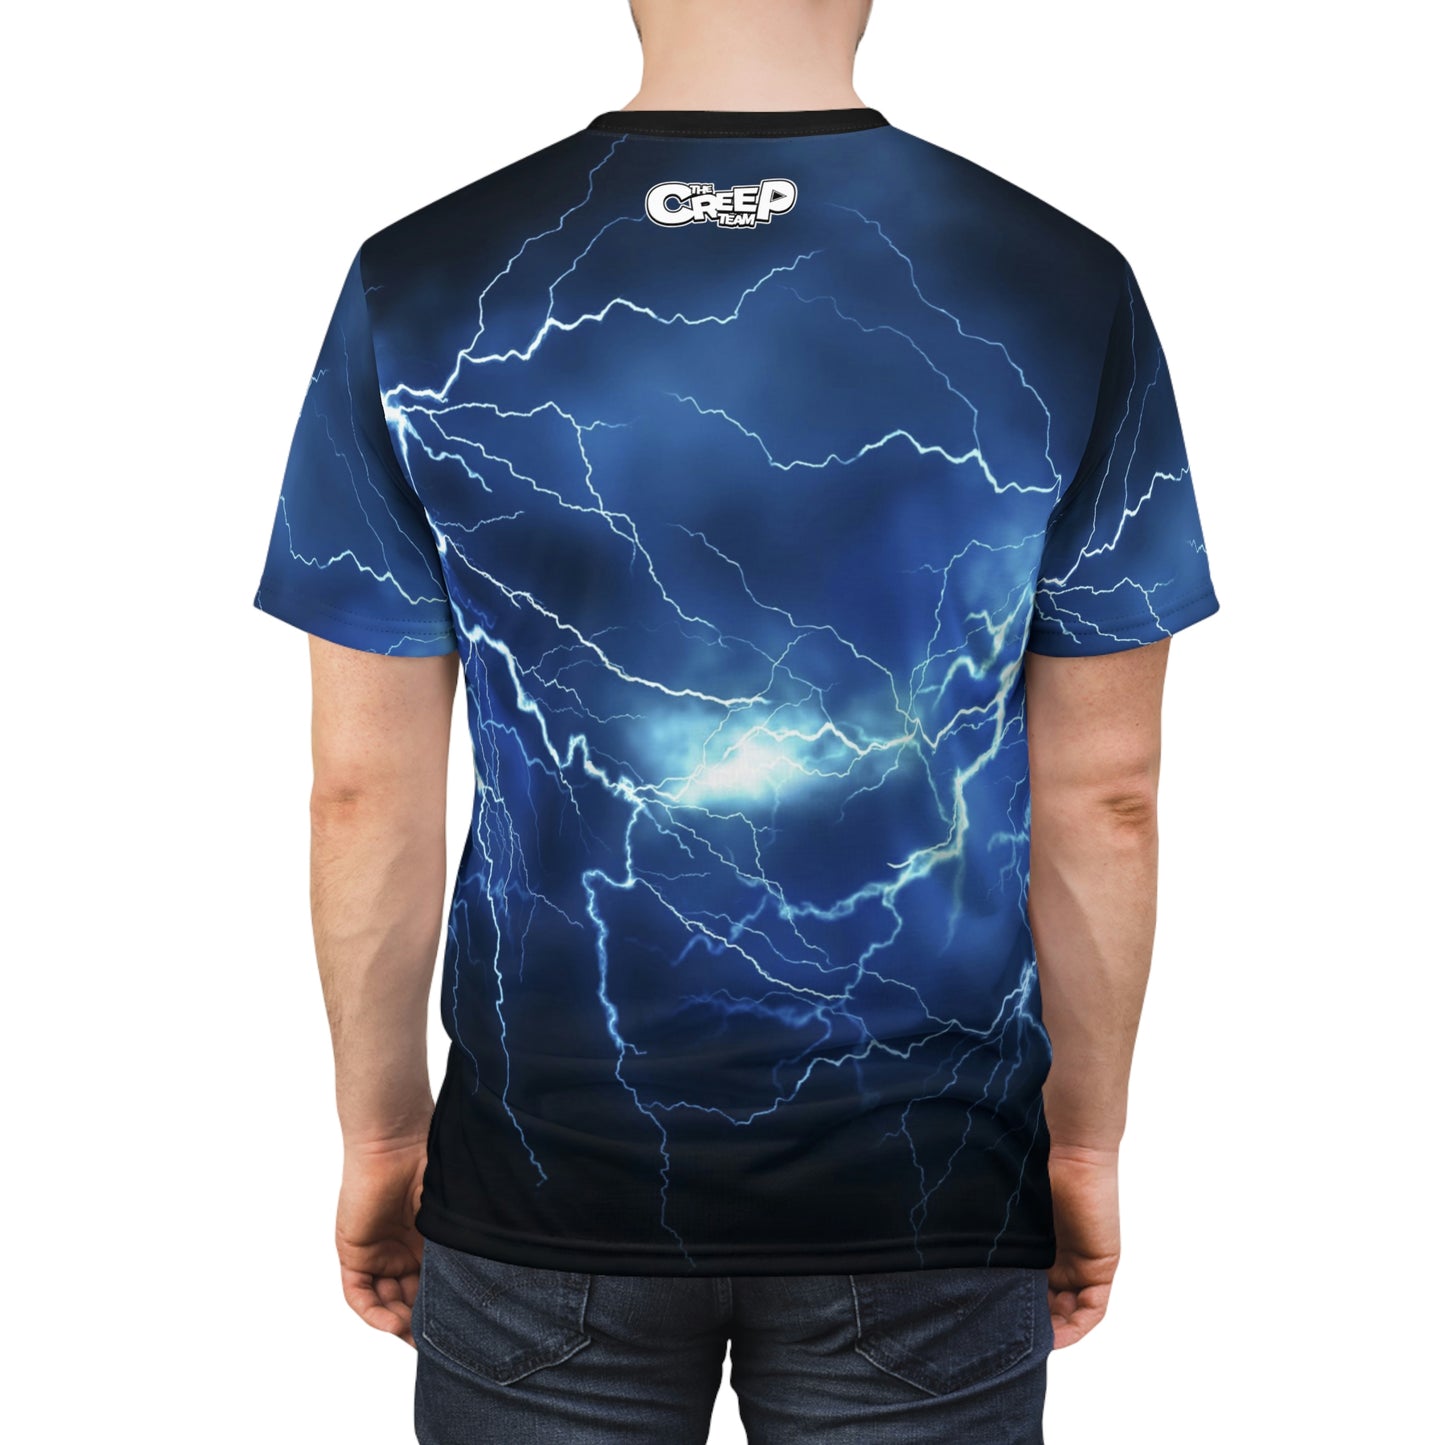 Kegan The Creep Lightning All-Over Print T-Shirt